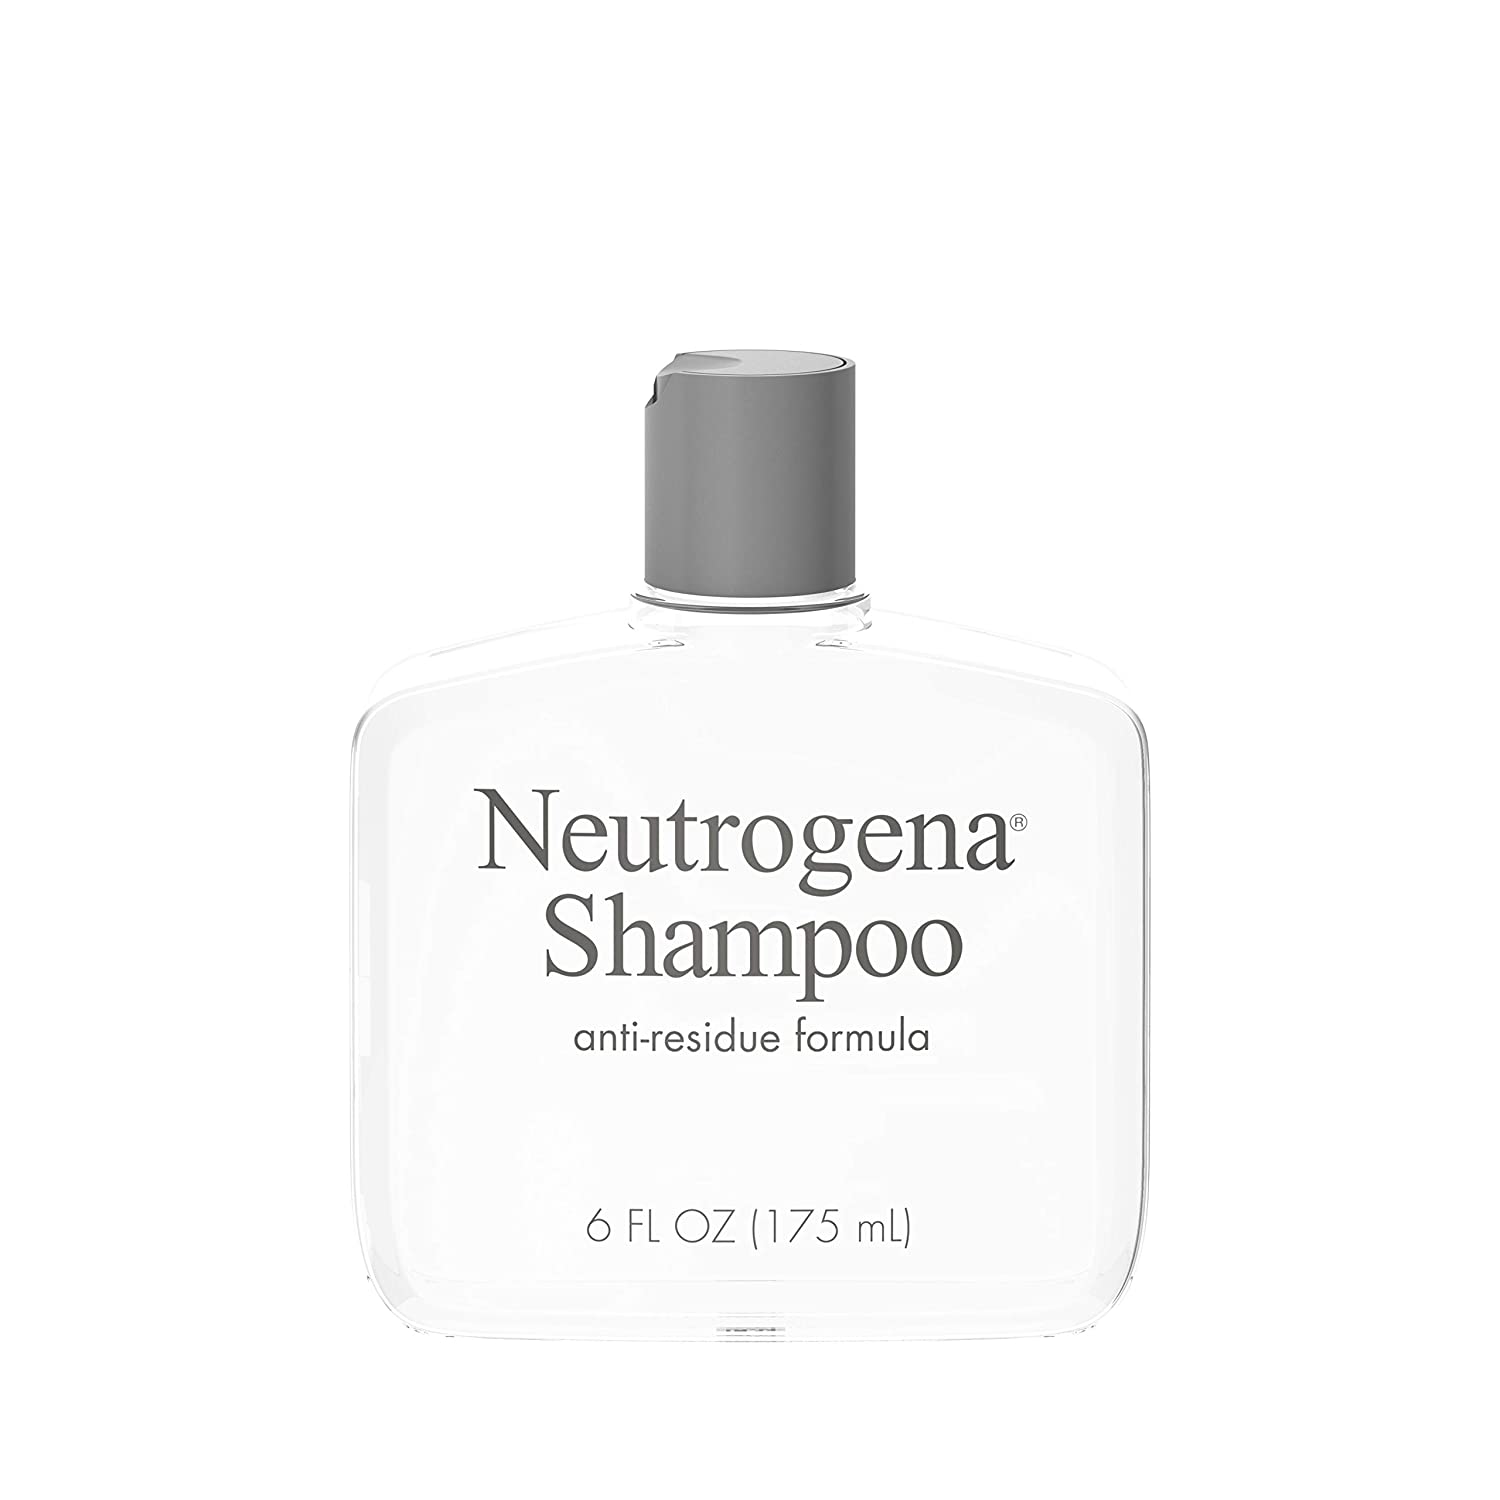 6-Oz Neutrogena Anti-Residue Clarifying Shampoo $3.80 w/ S&S + Free Shipping w/ Prime or on $25+